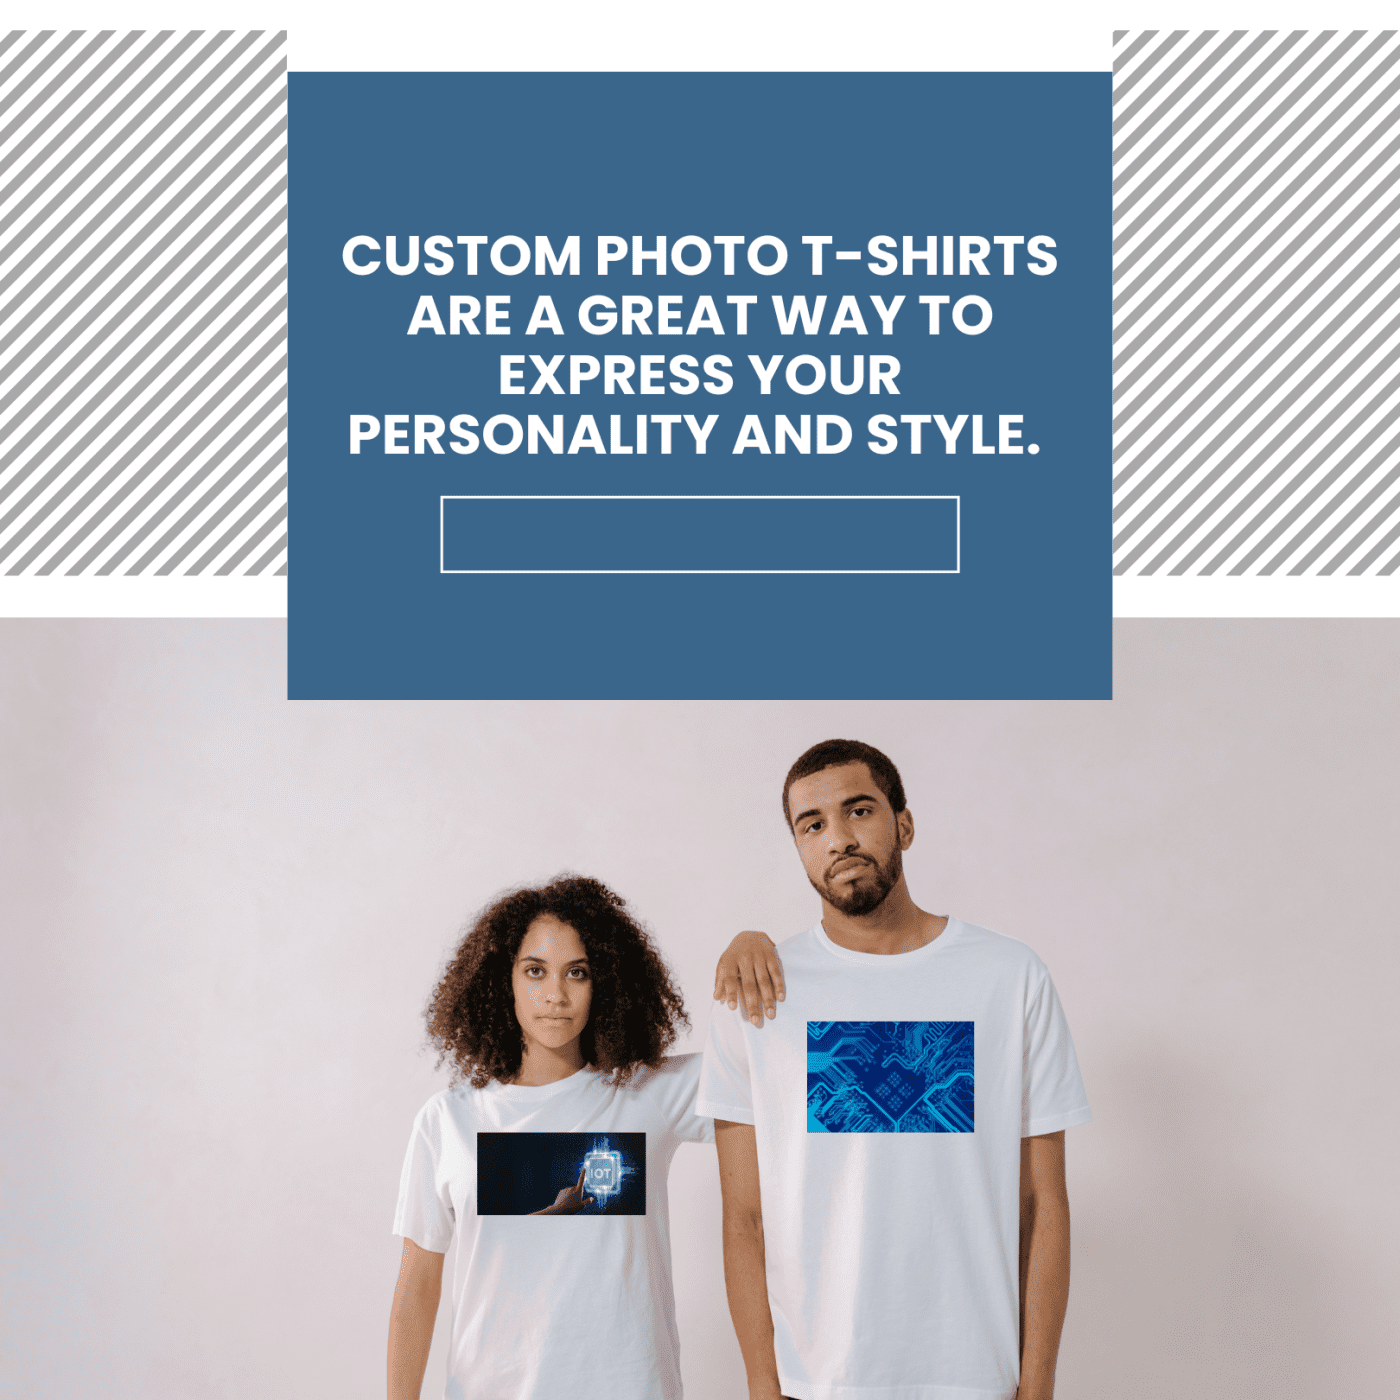 Design Your Own Custom Photo T-Shirts, t shirt printing, t-shirt printing, custom t-shirts, custom t shirts, custom tshirts